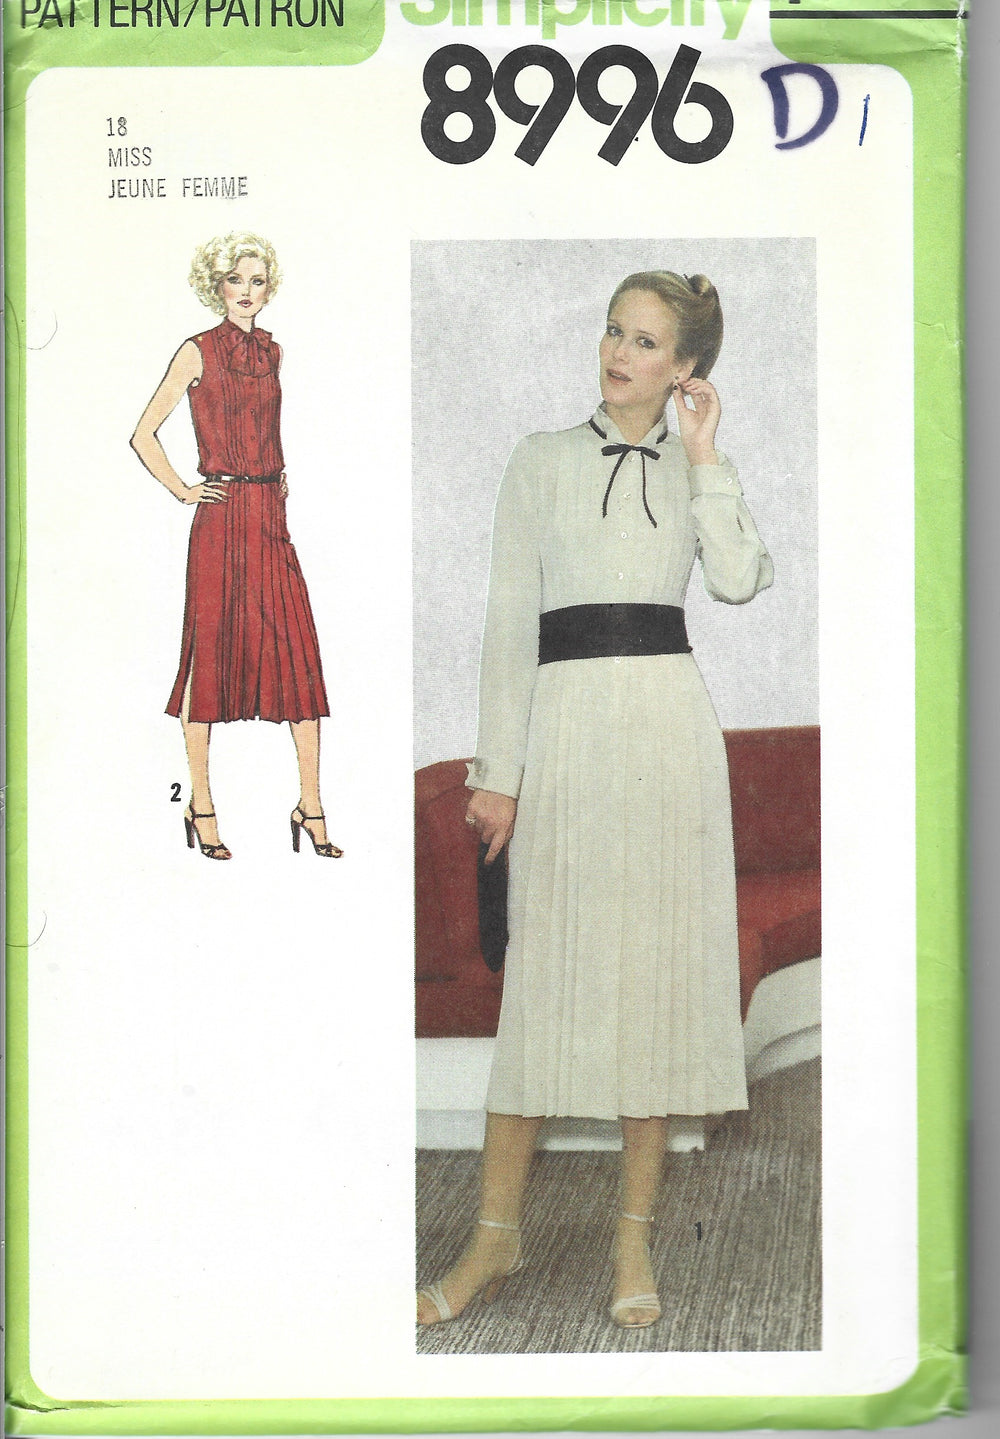 Simplicity 8996 dress vintage pattern